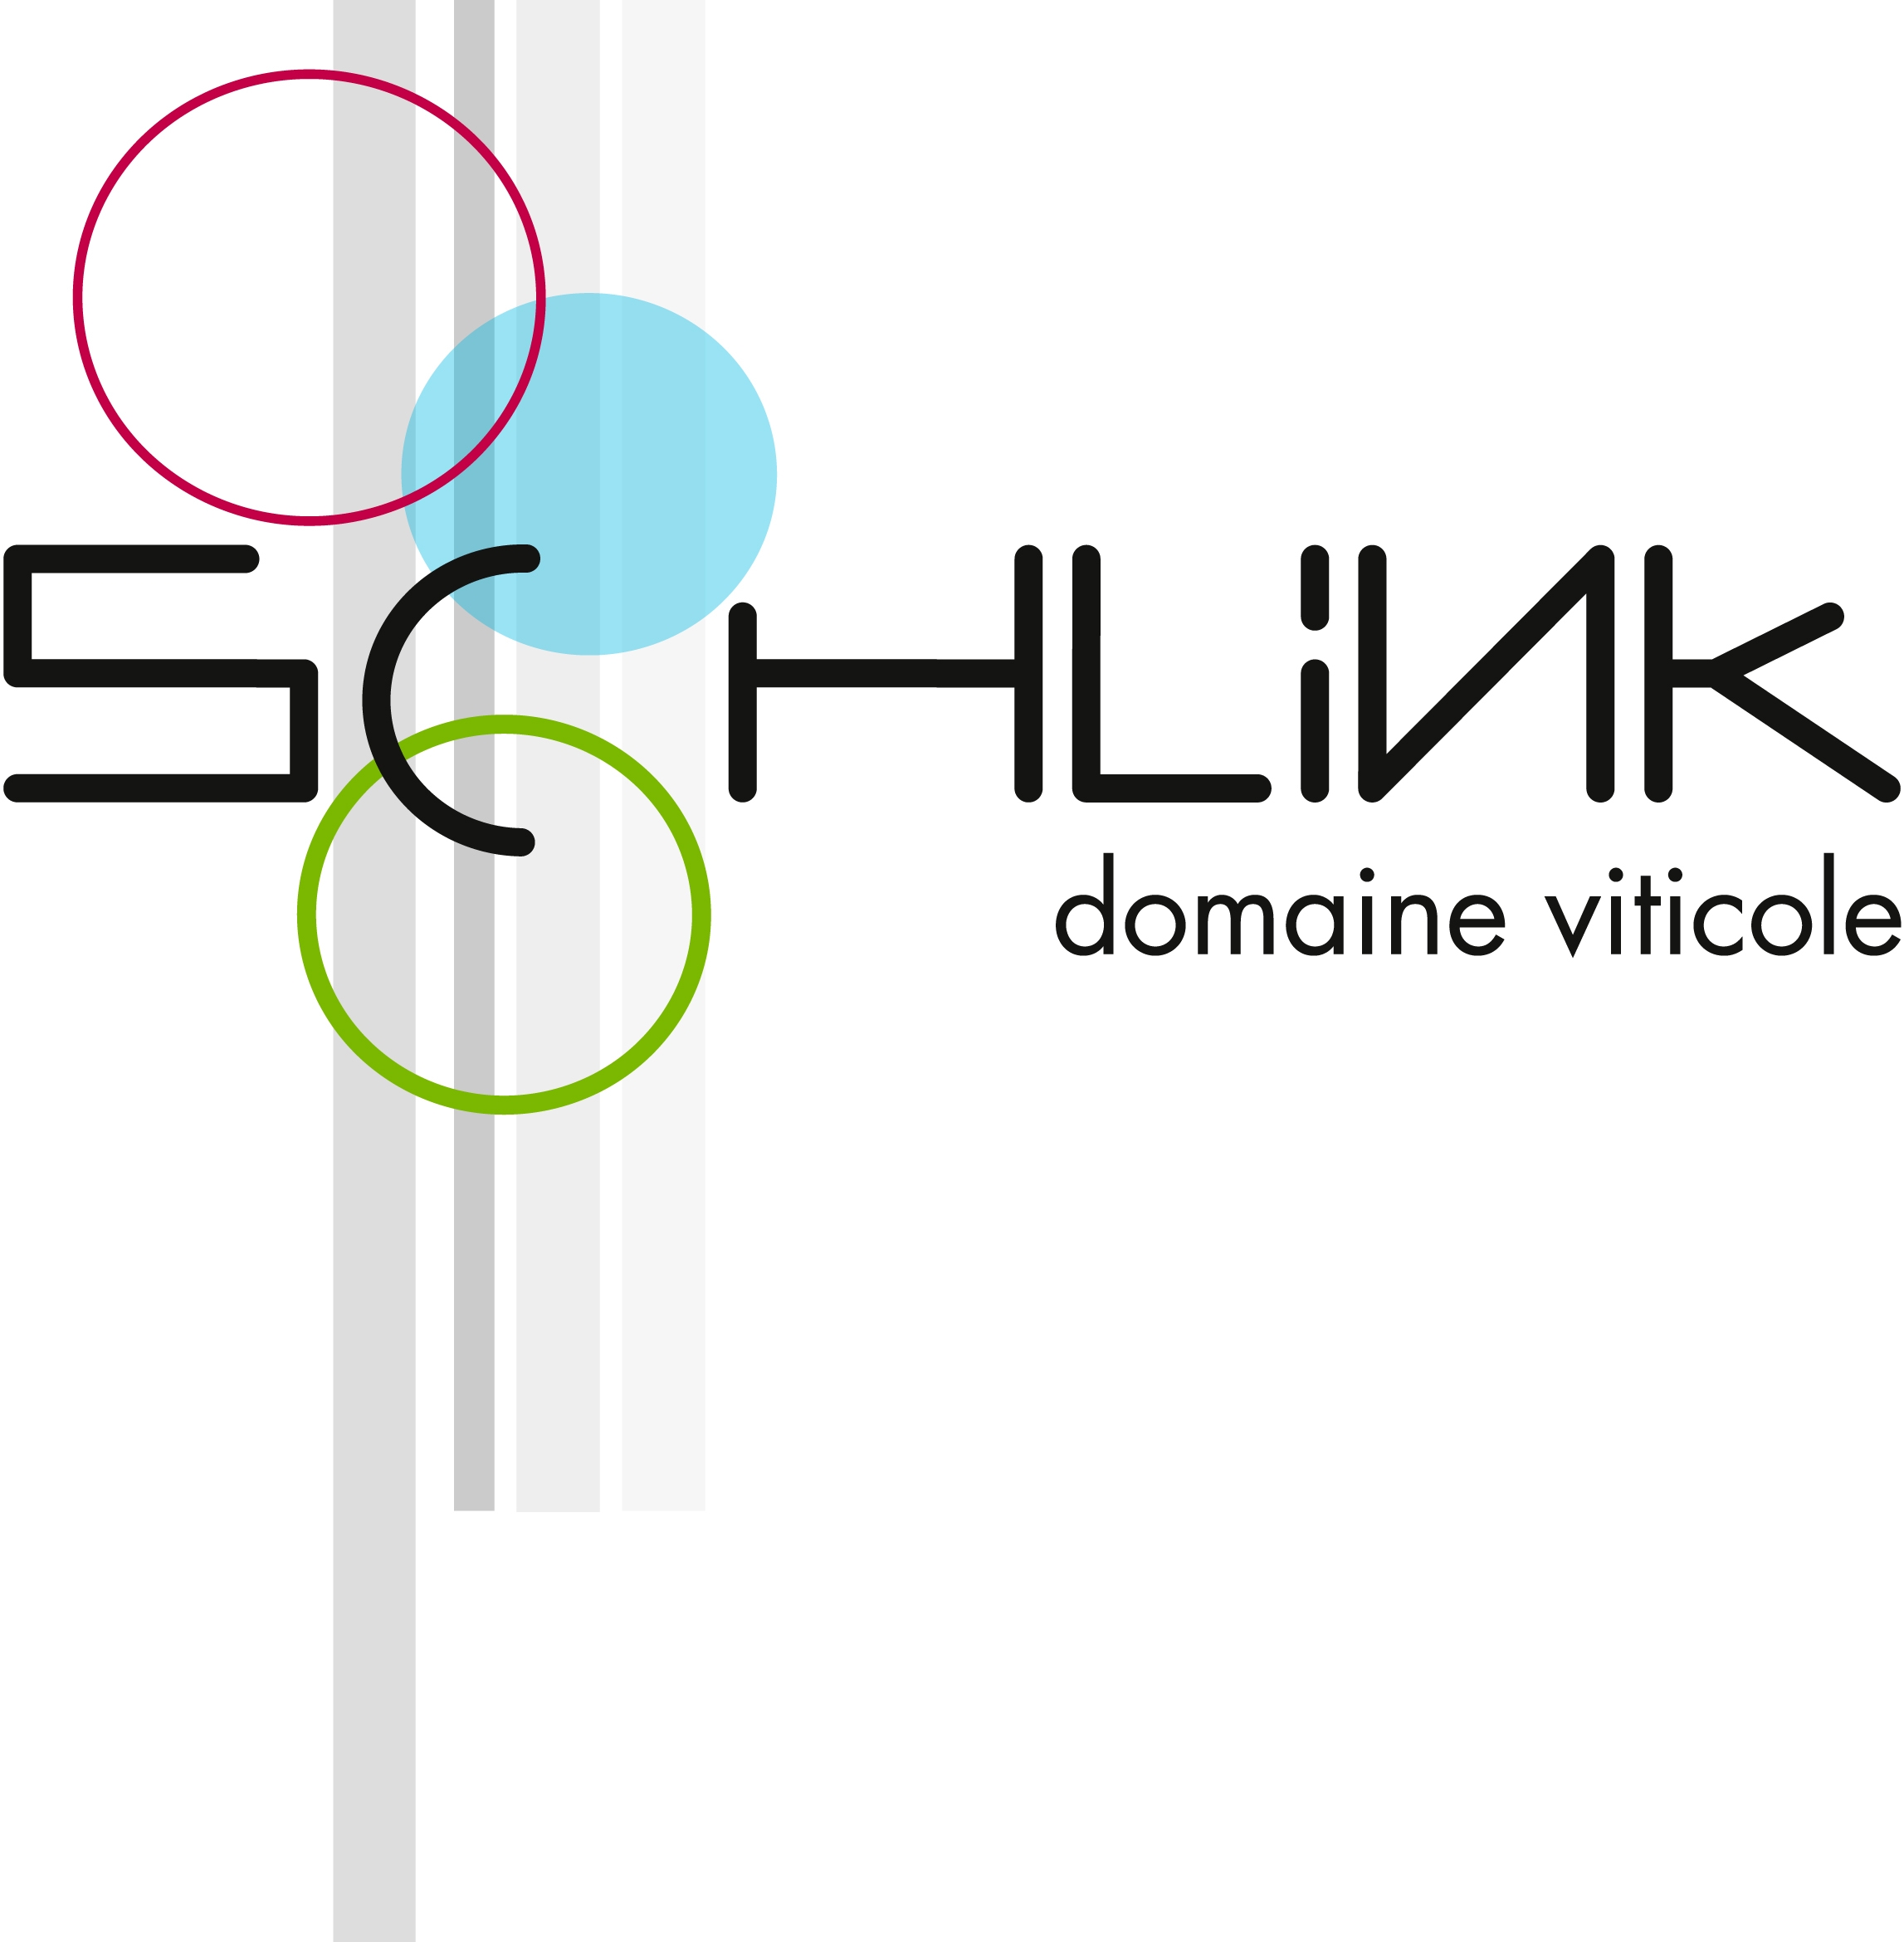 SCHLINK domaine viticole